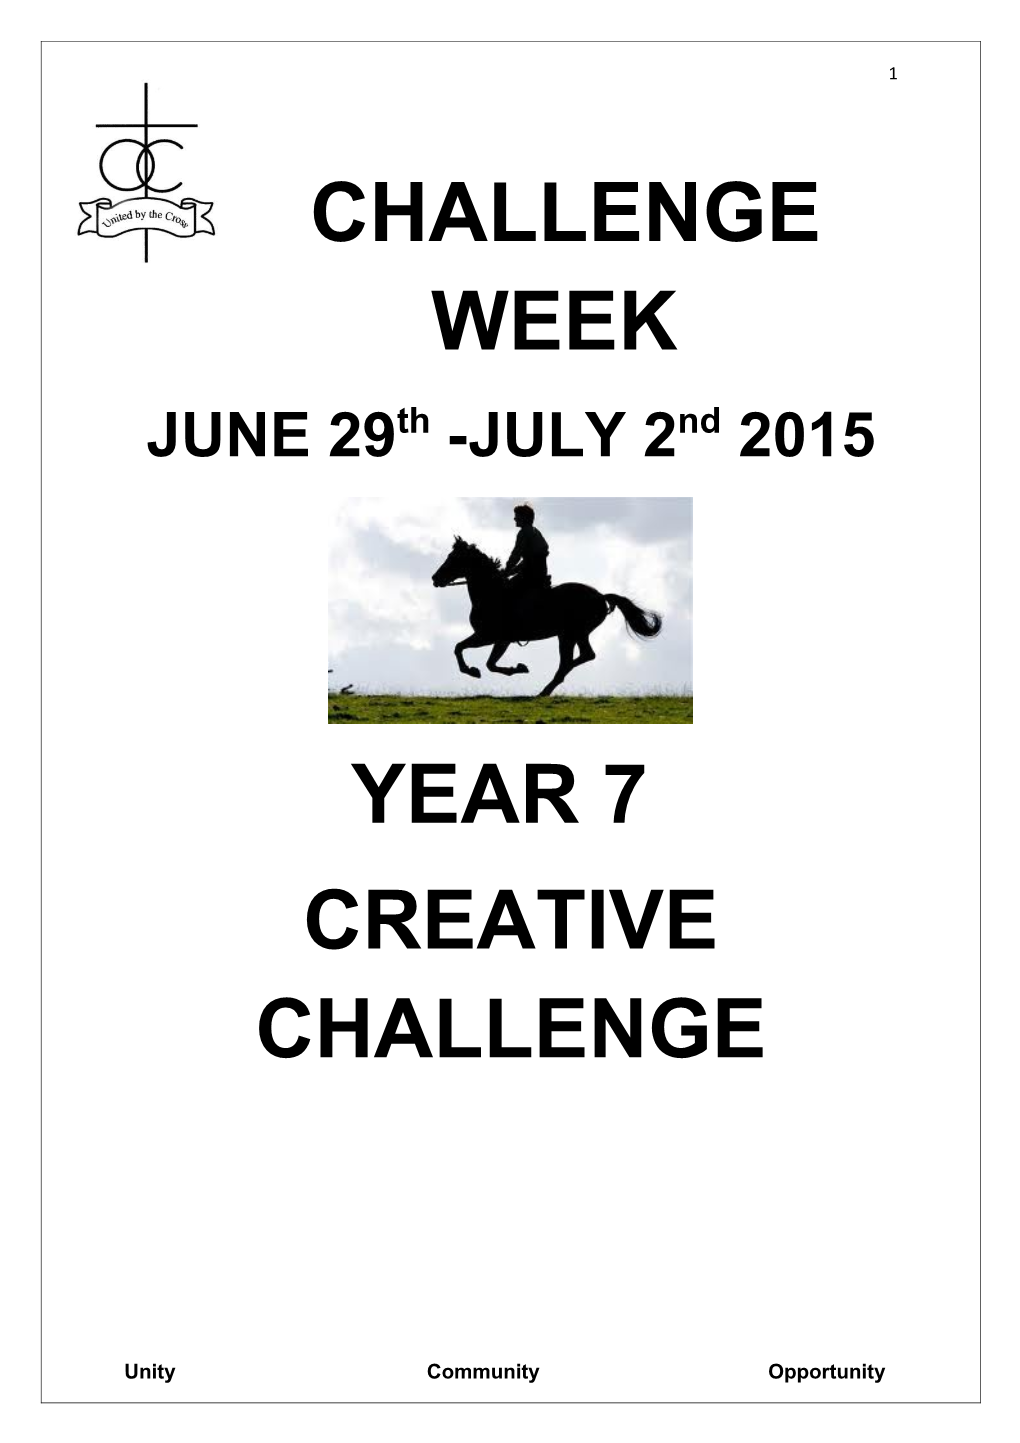 Creative Challenge